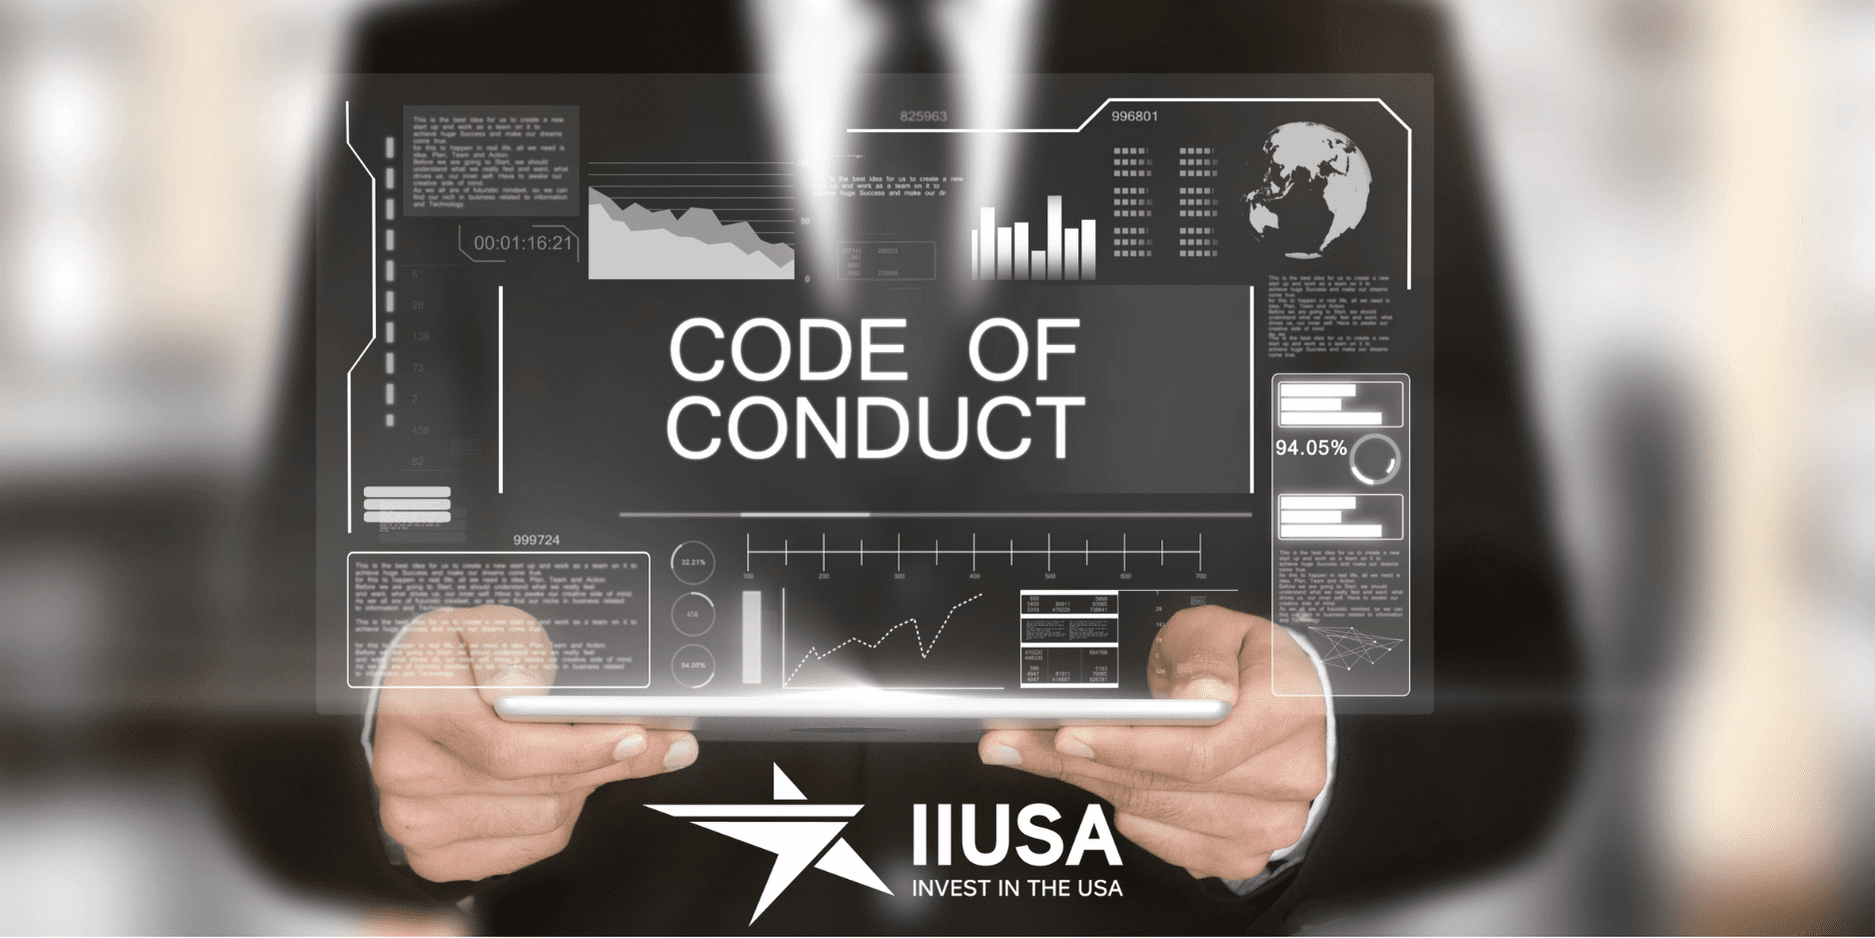 Spotlighting the IIUSA Code of Conduct